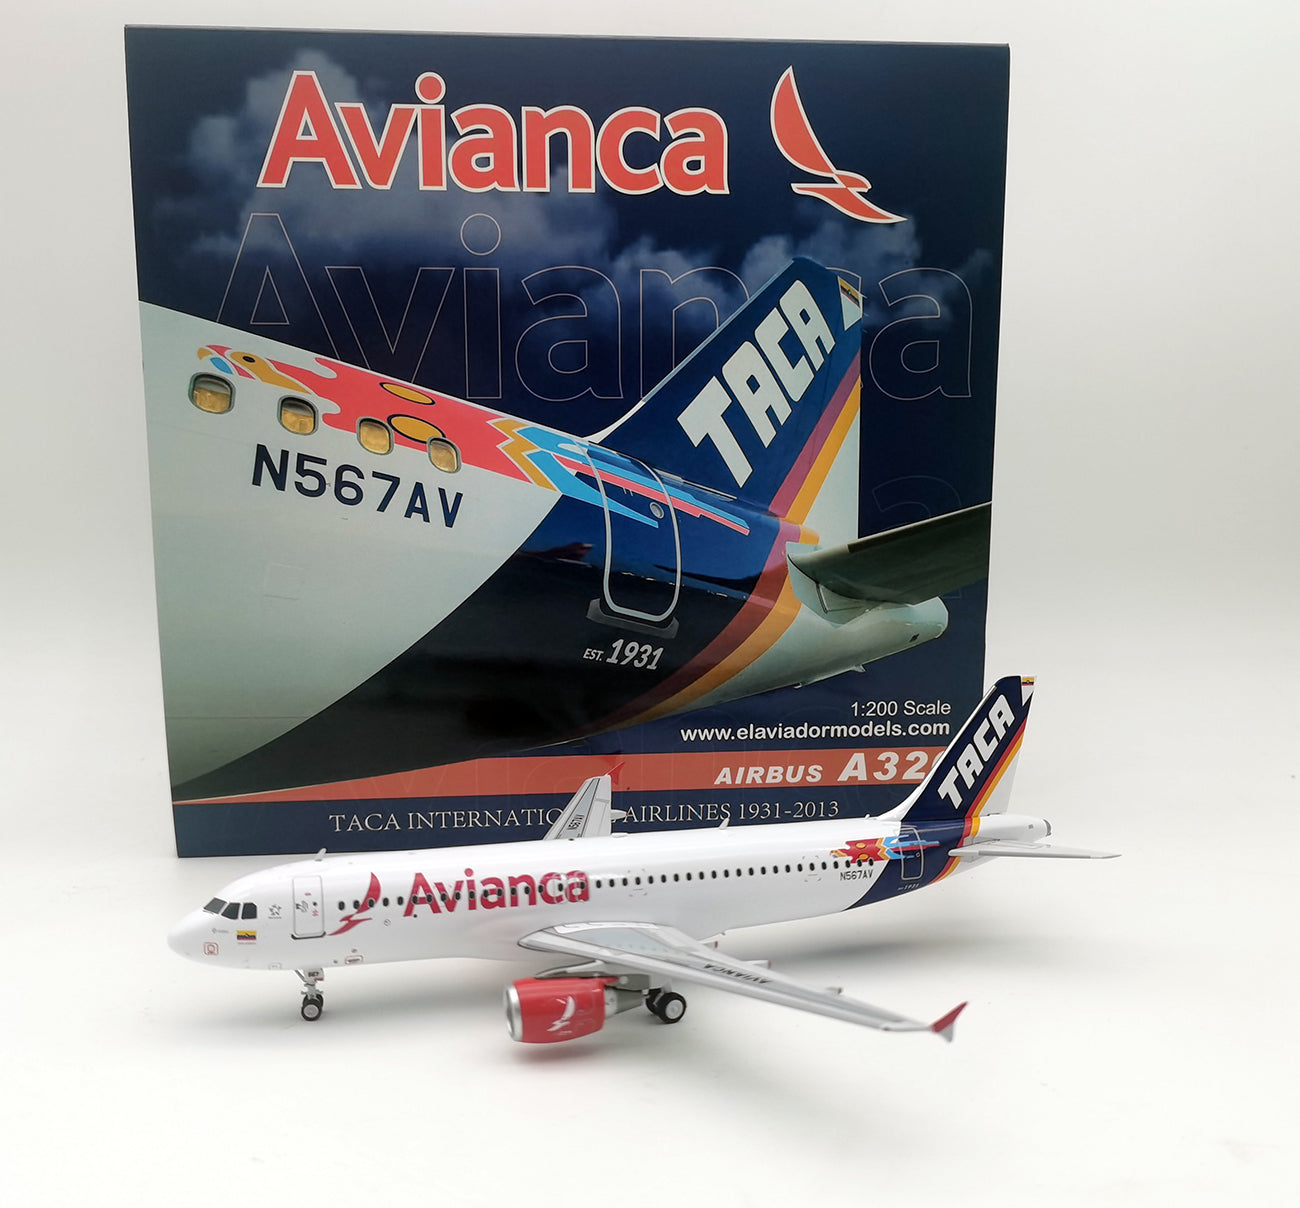 Avianca (TACA Retro Livery) / Airbus A320 / N567AV / EAV567 / elaviadormodels